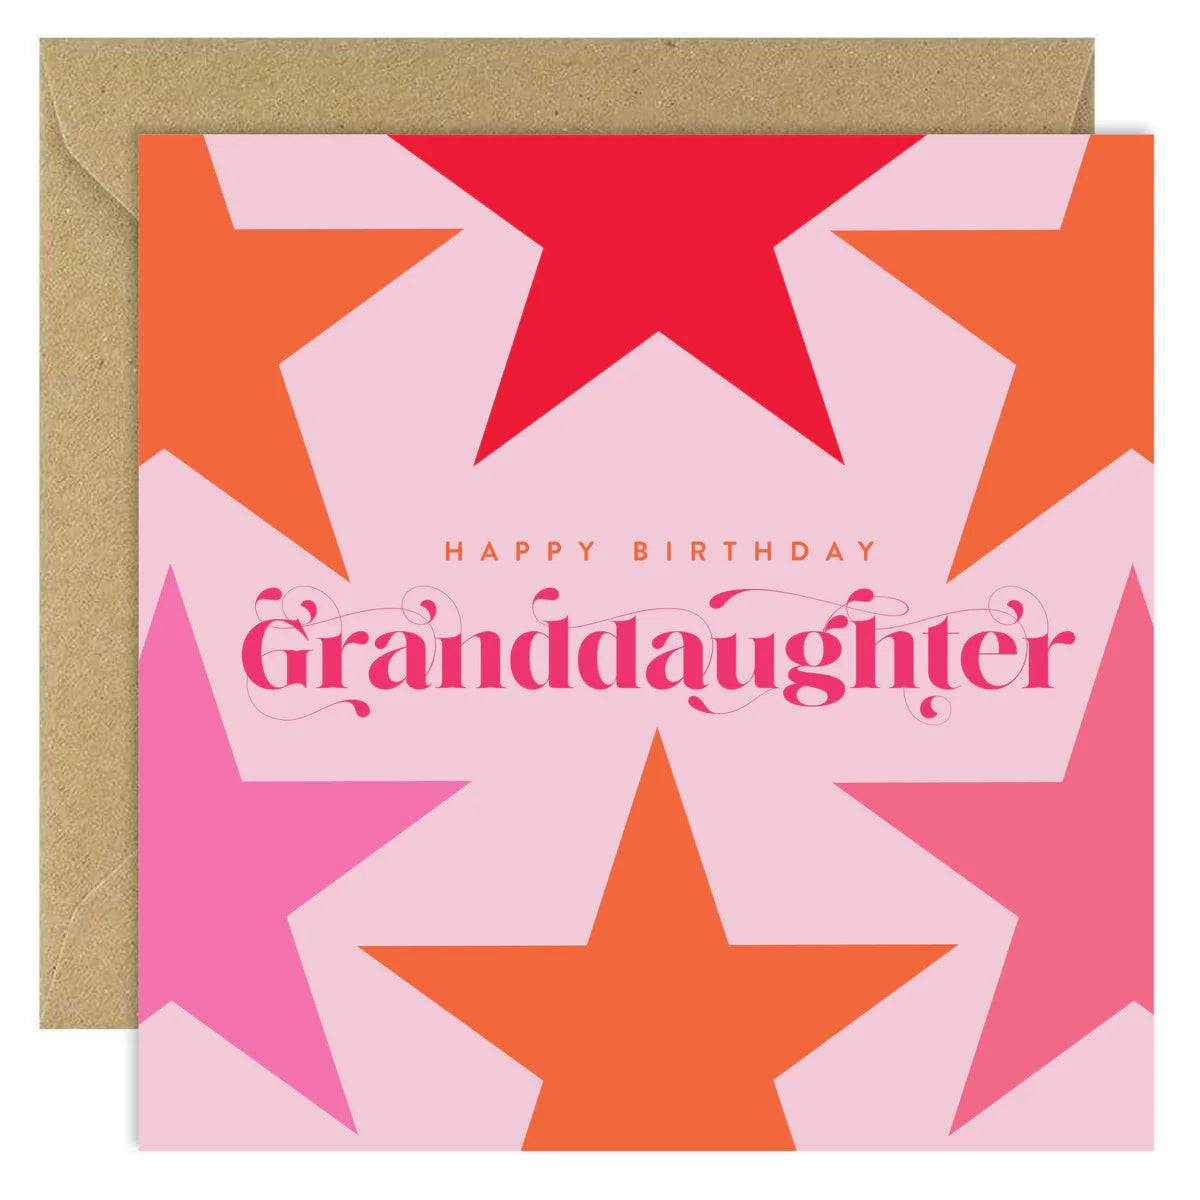 Fabulous Irish Made Greeting Cards Bold Bunny Birthday Granddaughter Geo by Weirs of Baggot Street